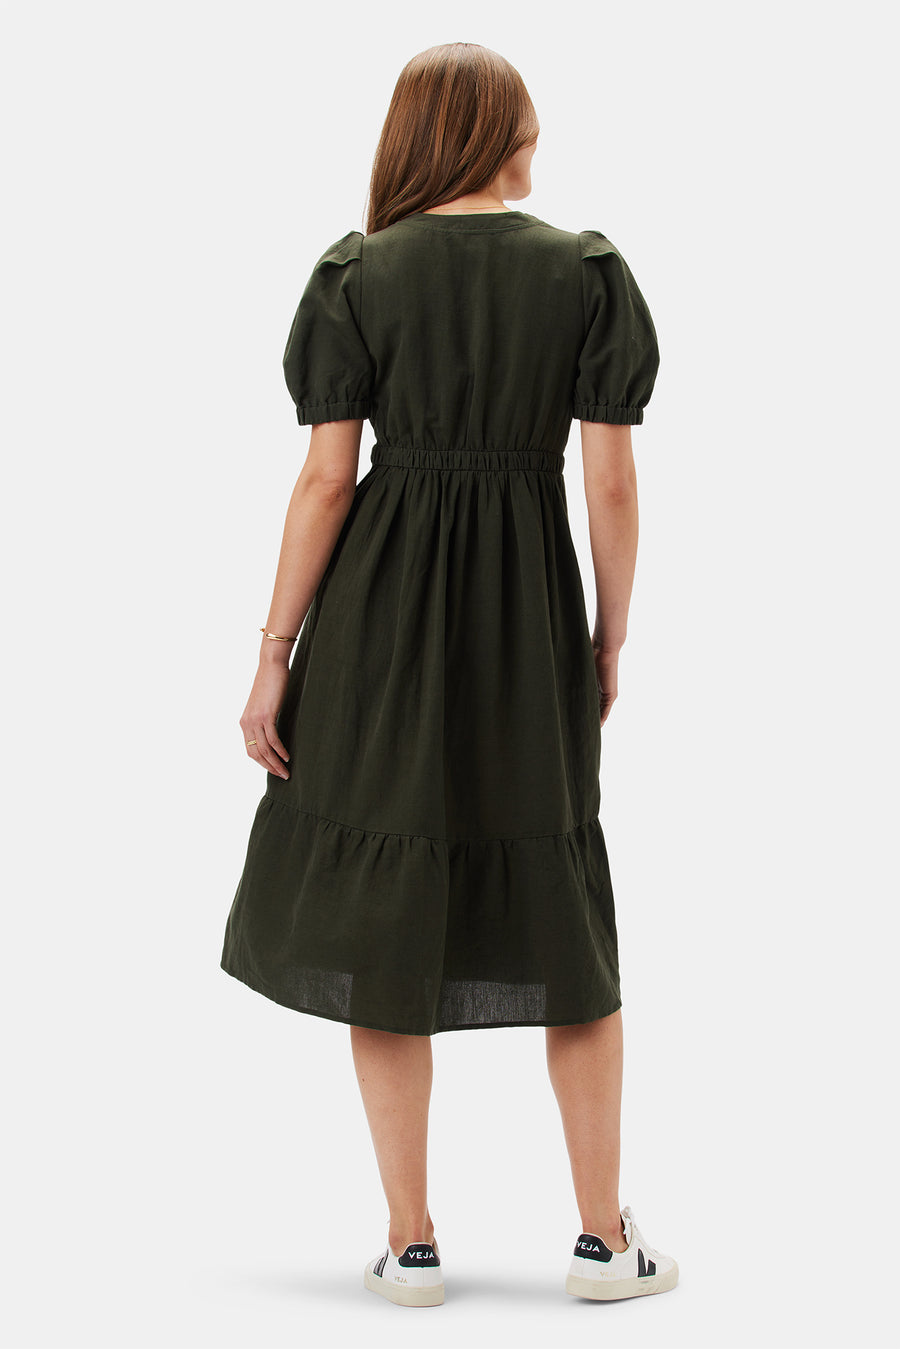 Danielle Cotton Linen Dress - Olive Green